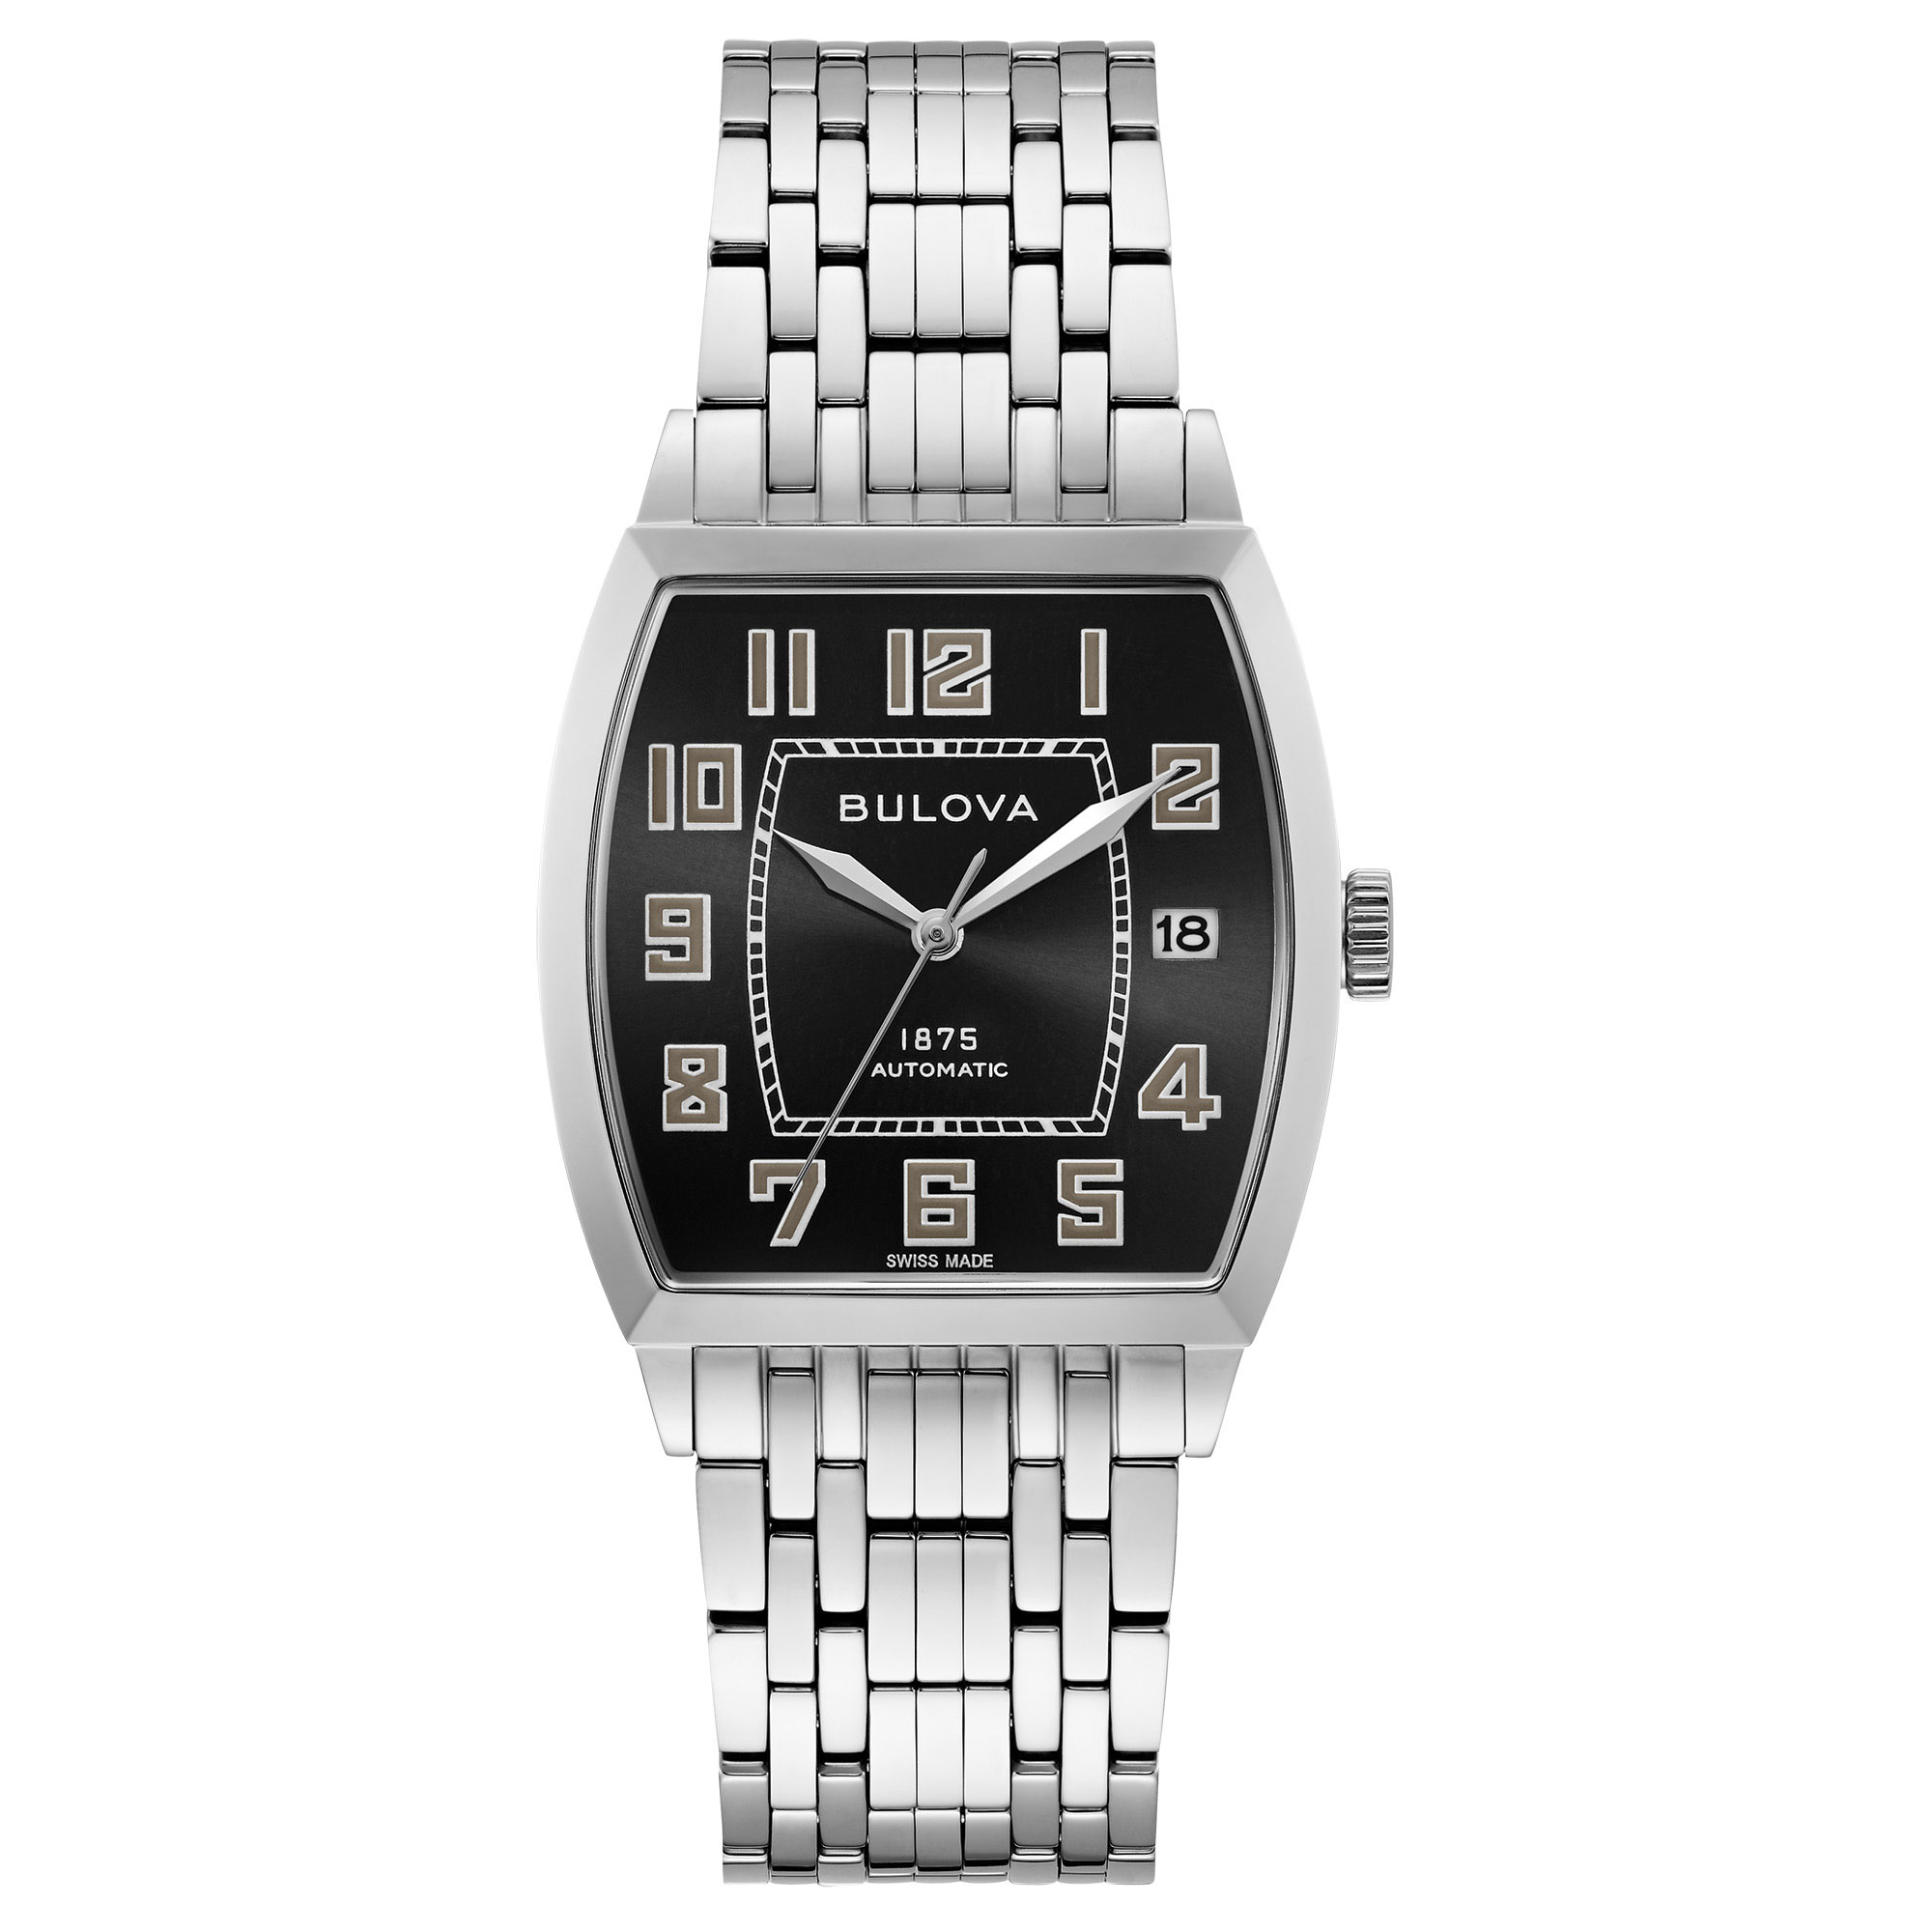 Joseph Bulova Banker Limited Edition Black Dial Stainless Steel Bracelet Watch 33mm - 96B330